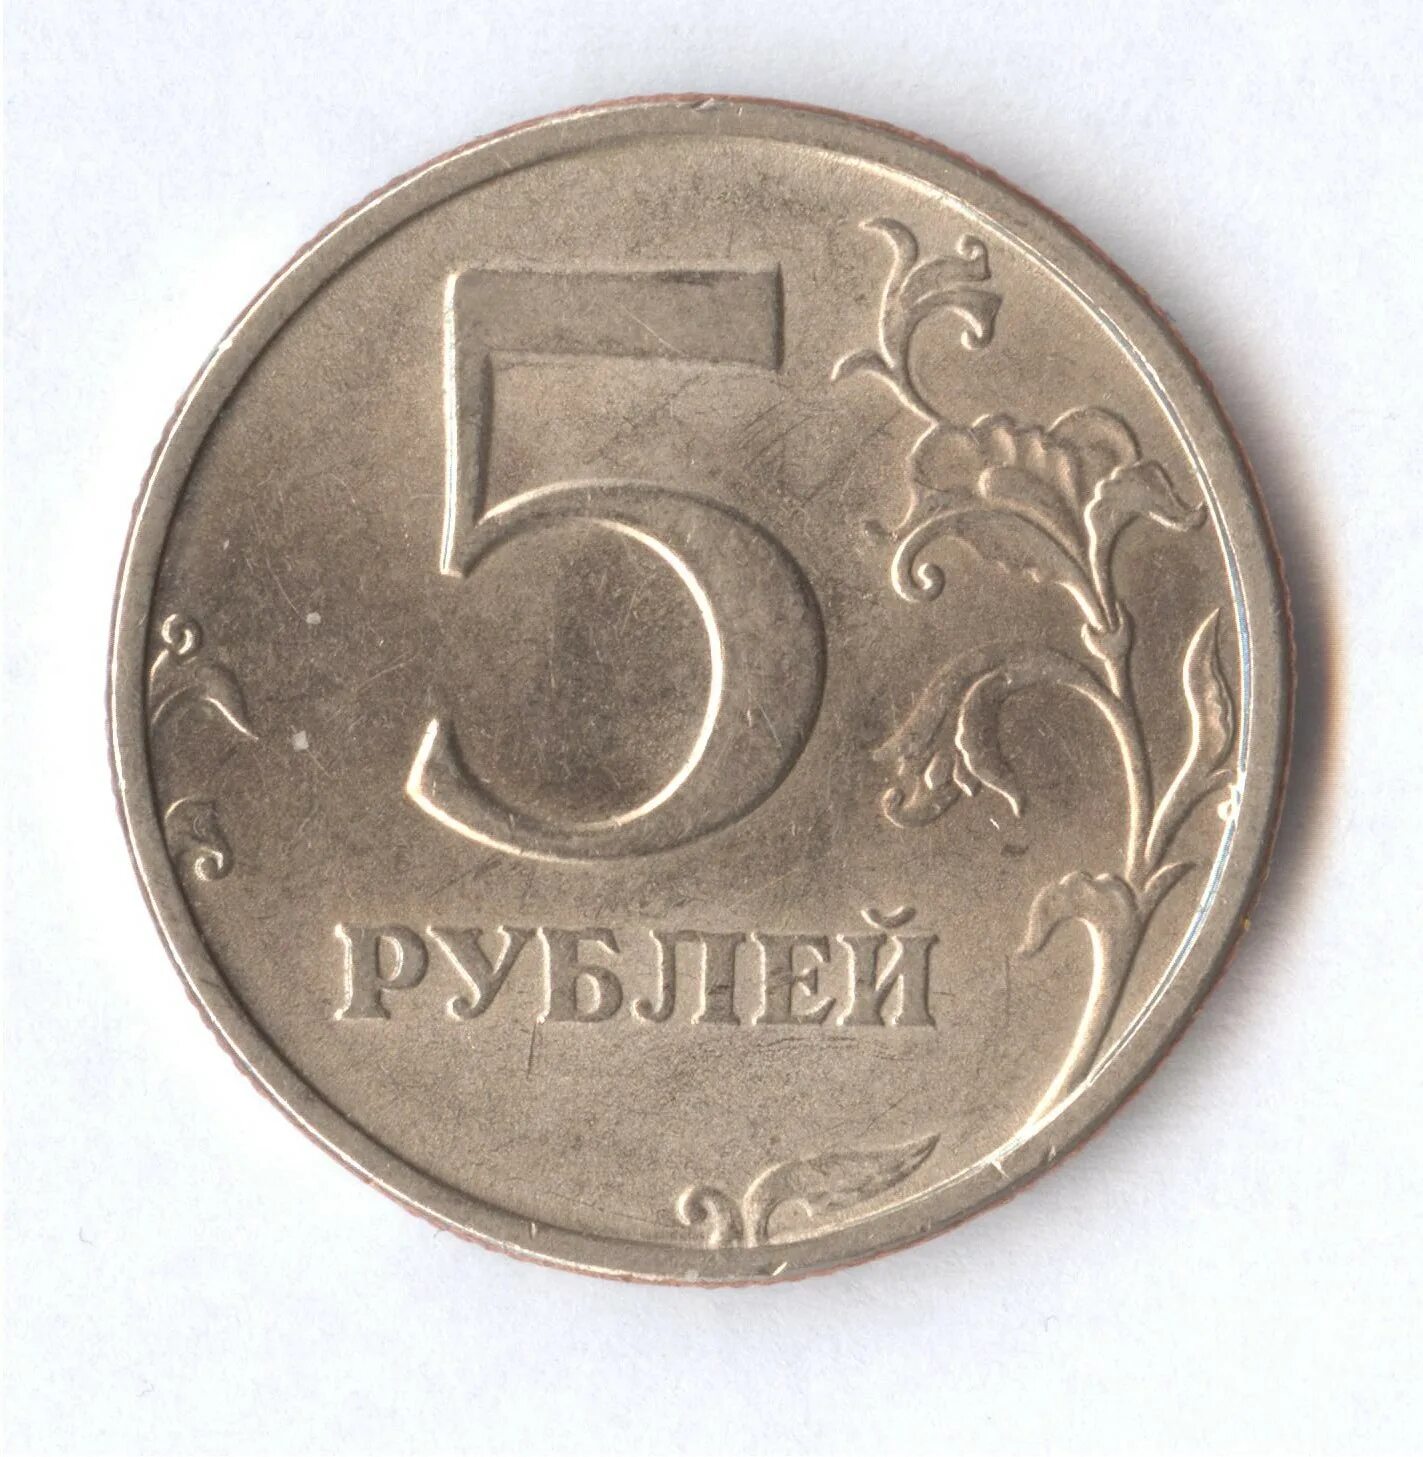 Цена 5 рублей со. 5 Рублей 1998 СПМД. Дорогие монеты 5 рублей 1998. Монеты СПМД 1998 год 5 рублей. Нумизматика 5 рублей 1998.